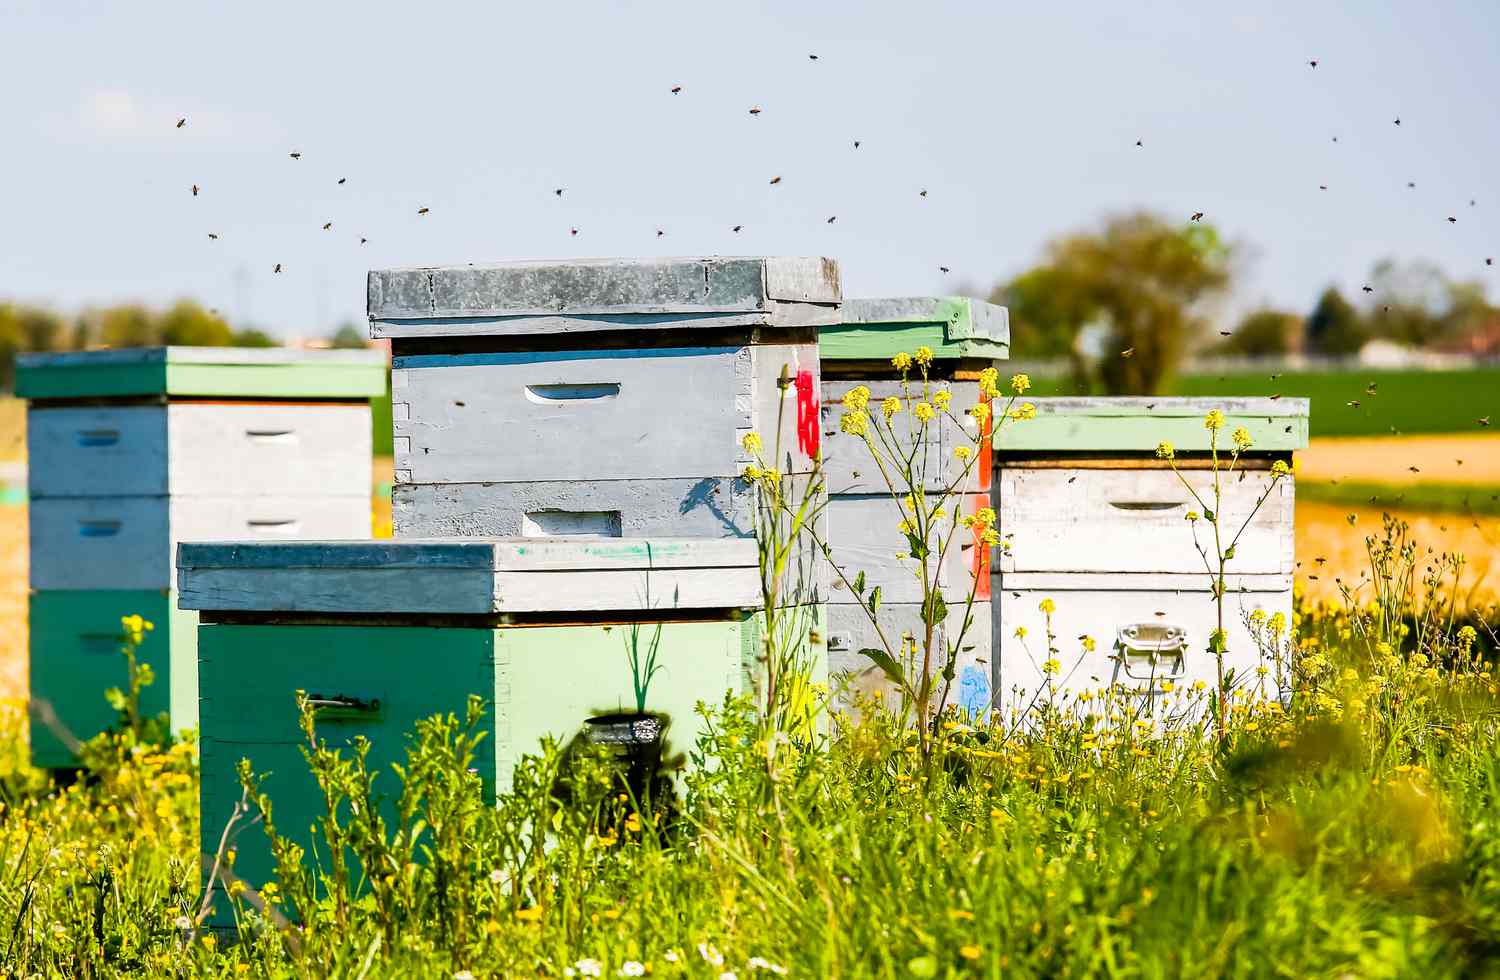 beehives in corner of sunflower field